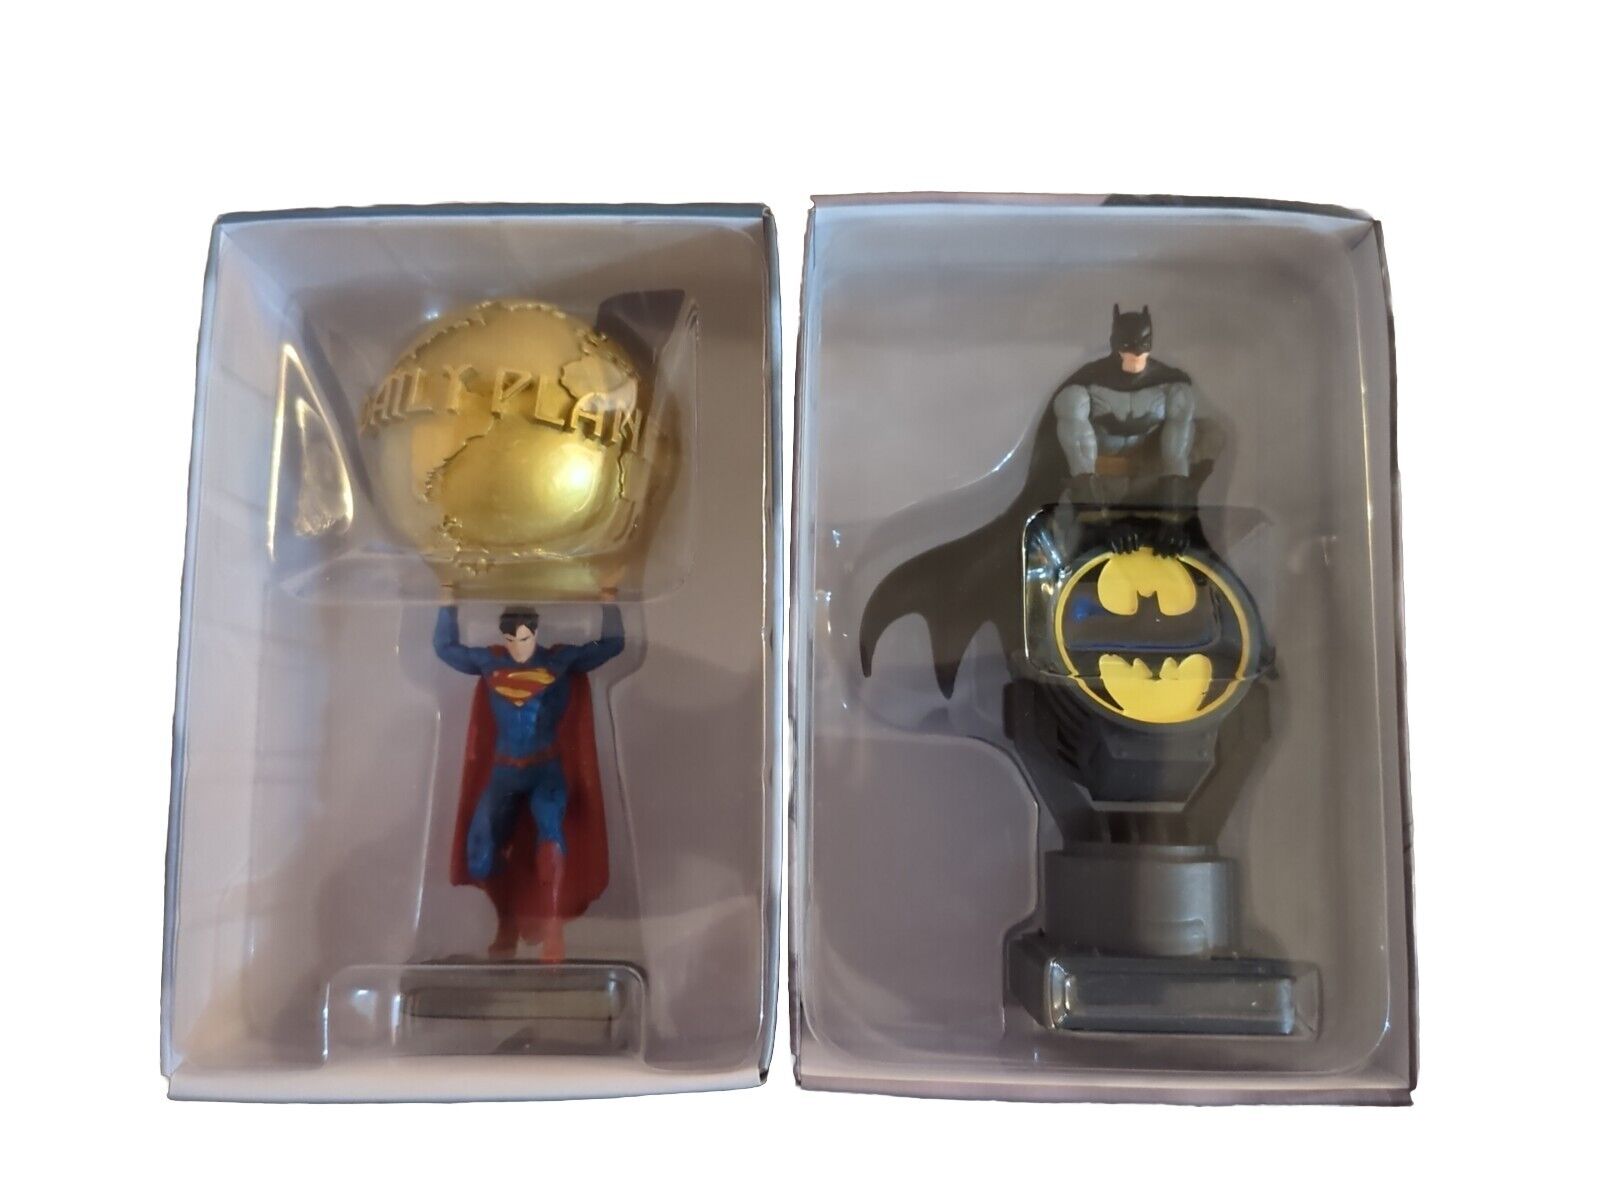 Both Eaglemoss Superman Holding Daily Planet Globe and Batman Bat Signal Figures